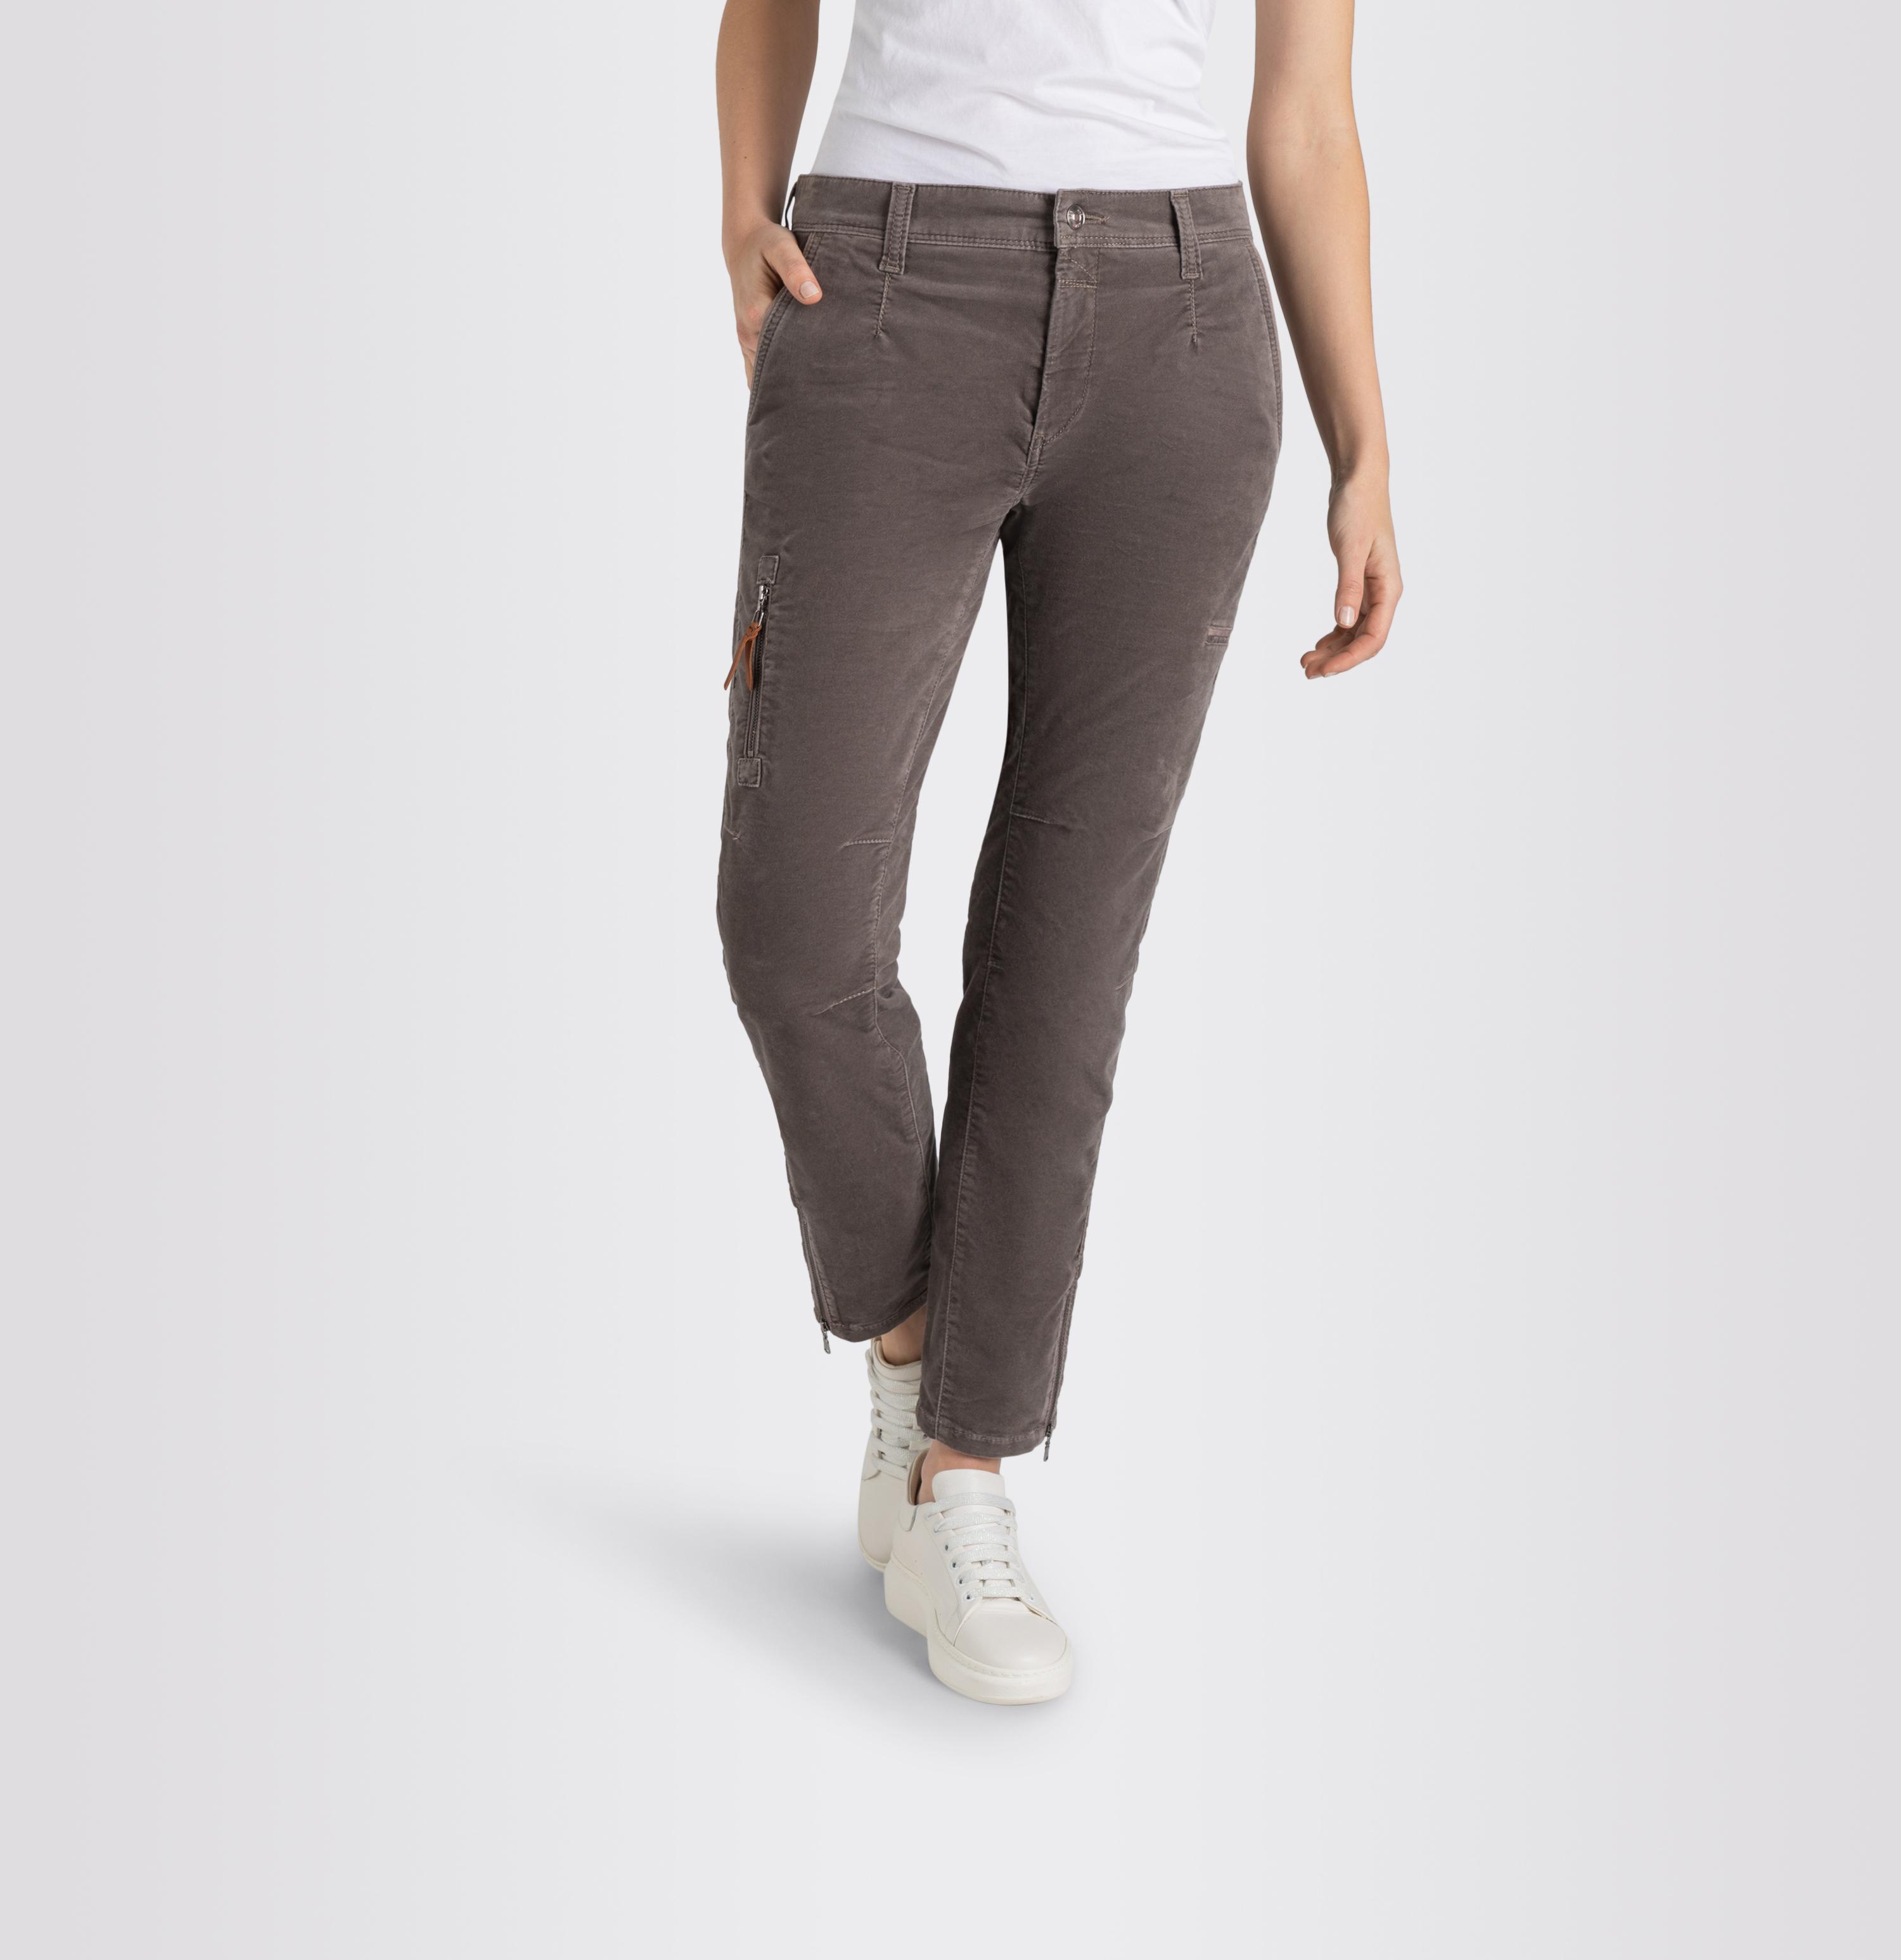 Women Pants, Rich FI 294 MAC Velvet, Jeans Shop brown Cargo - 